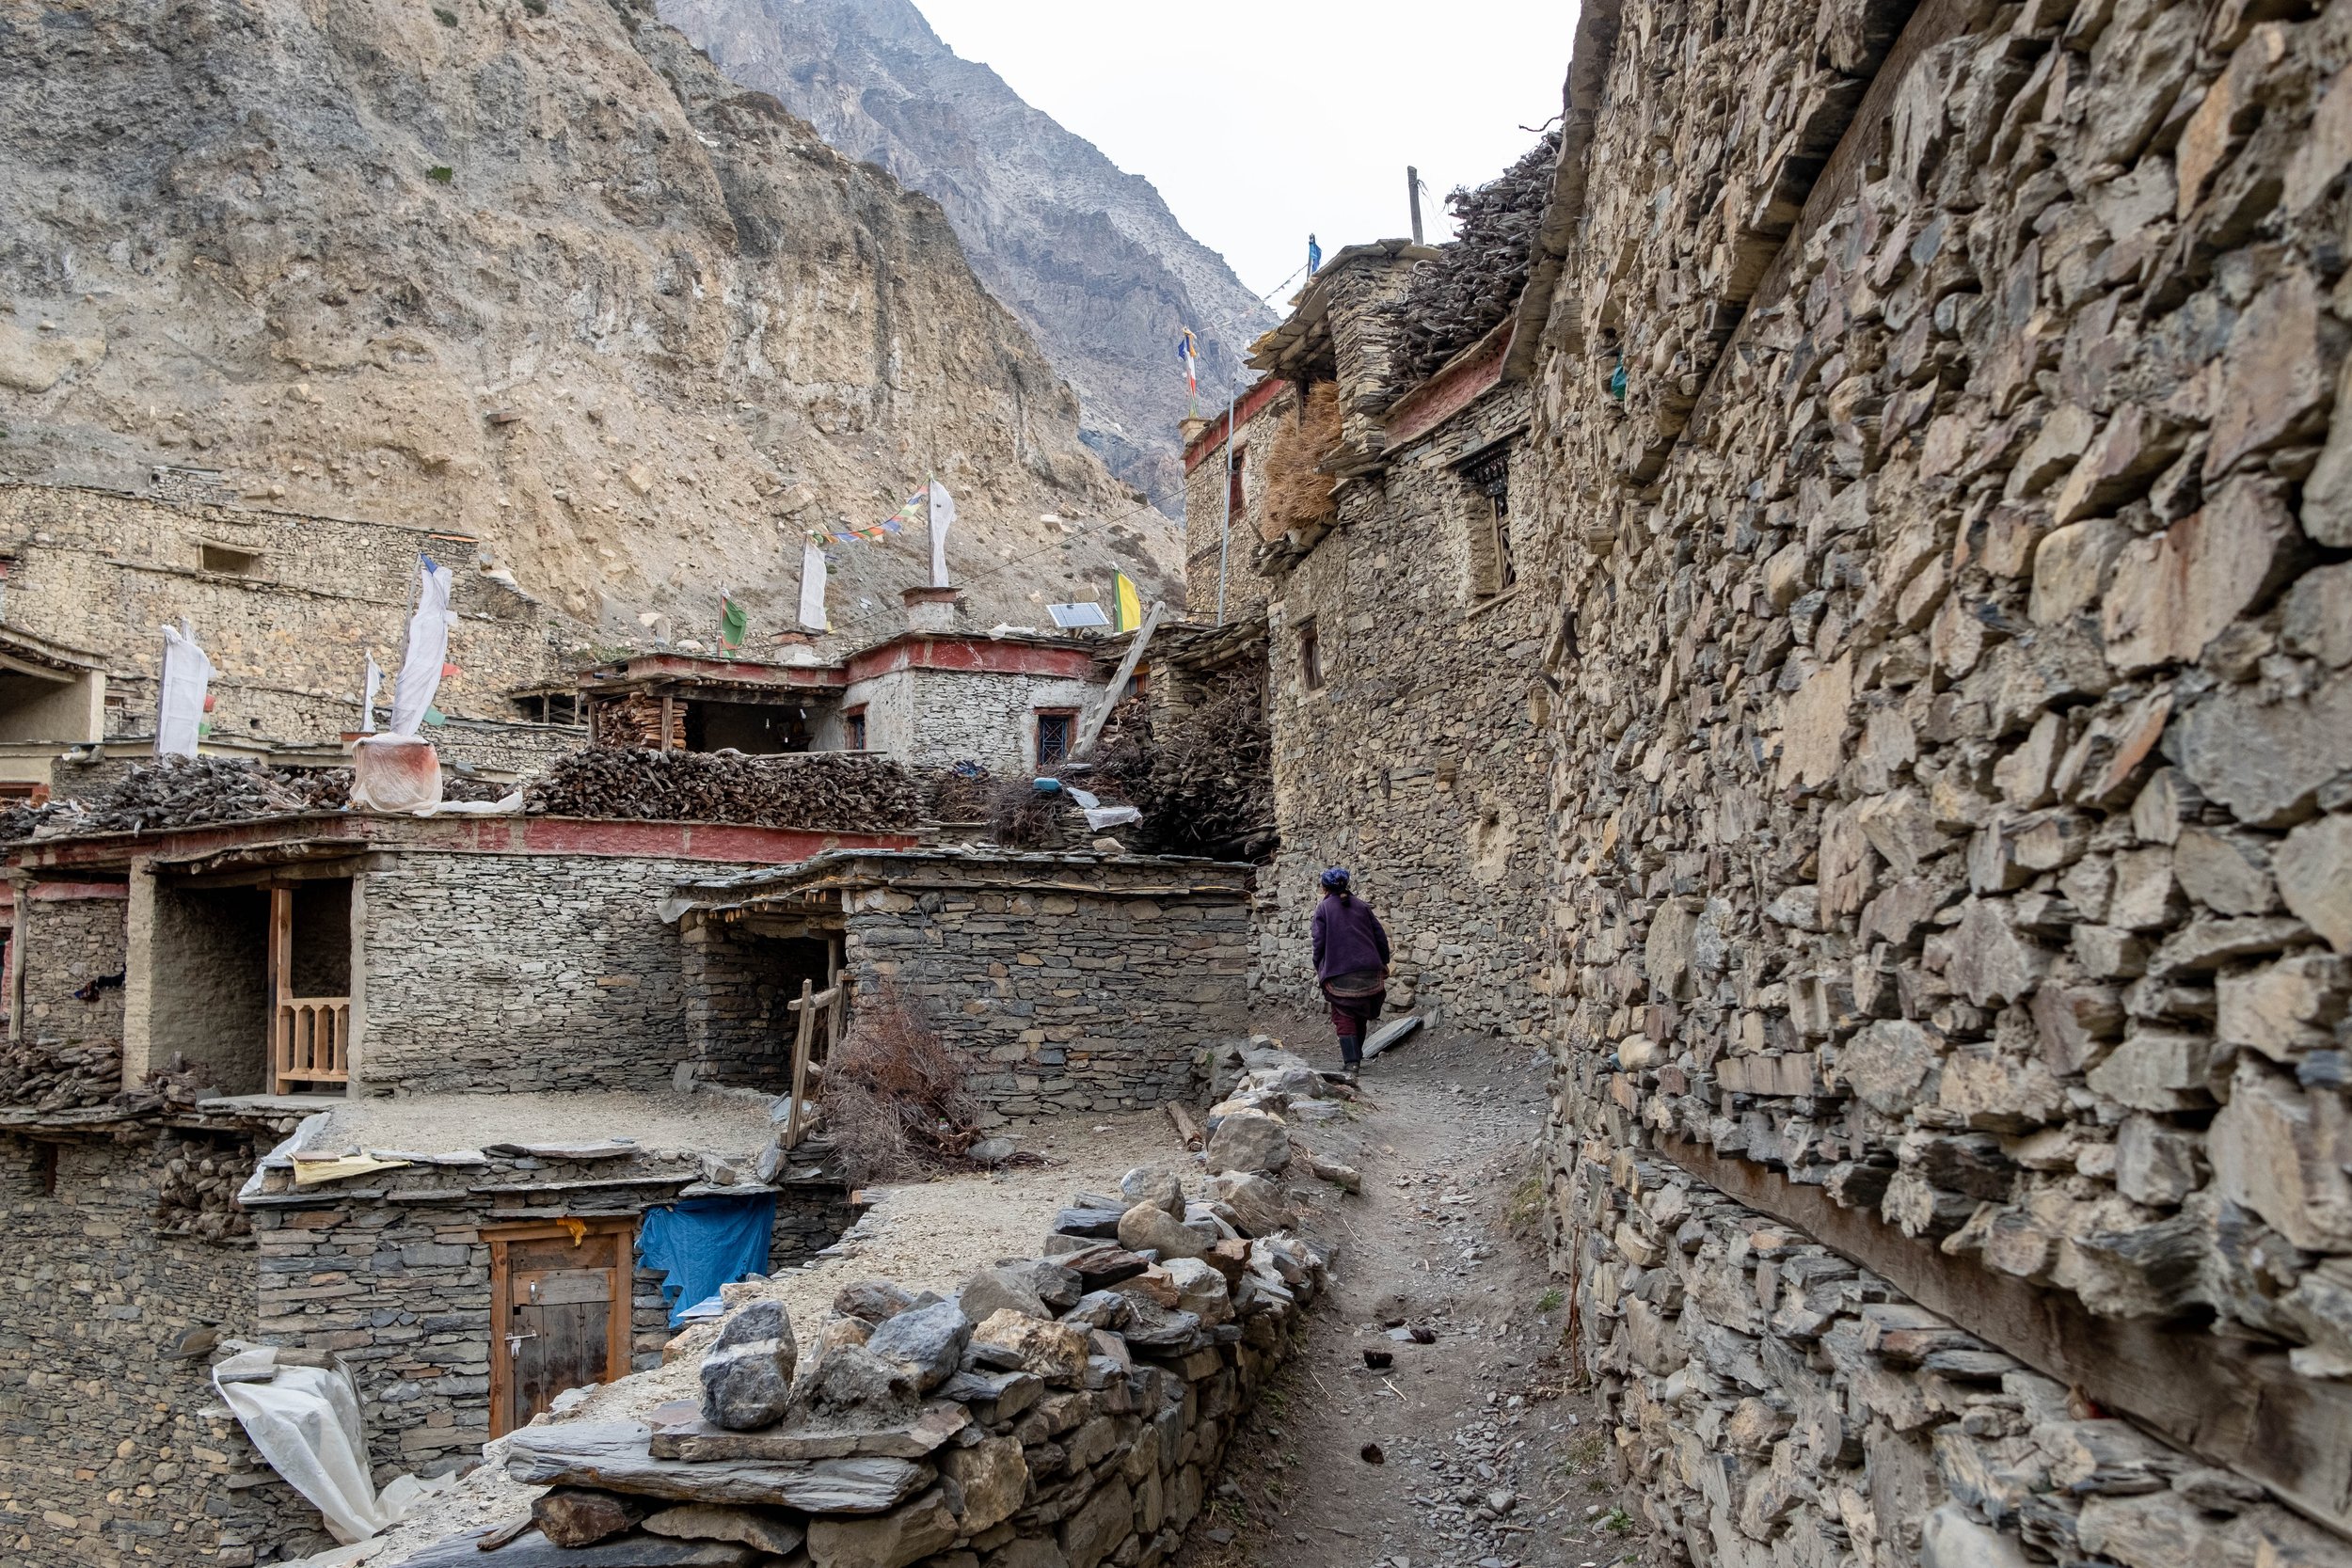  Phu village, Nepal for South China Morning Post  